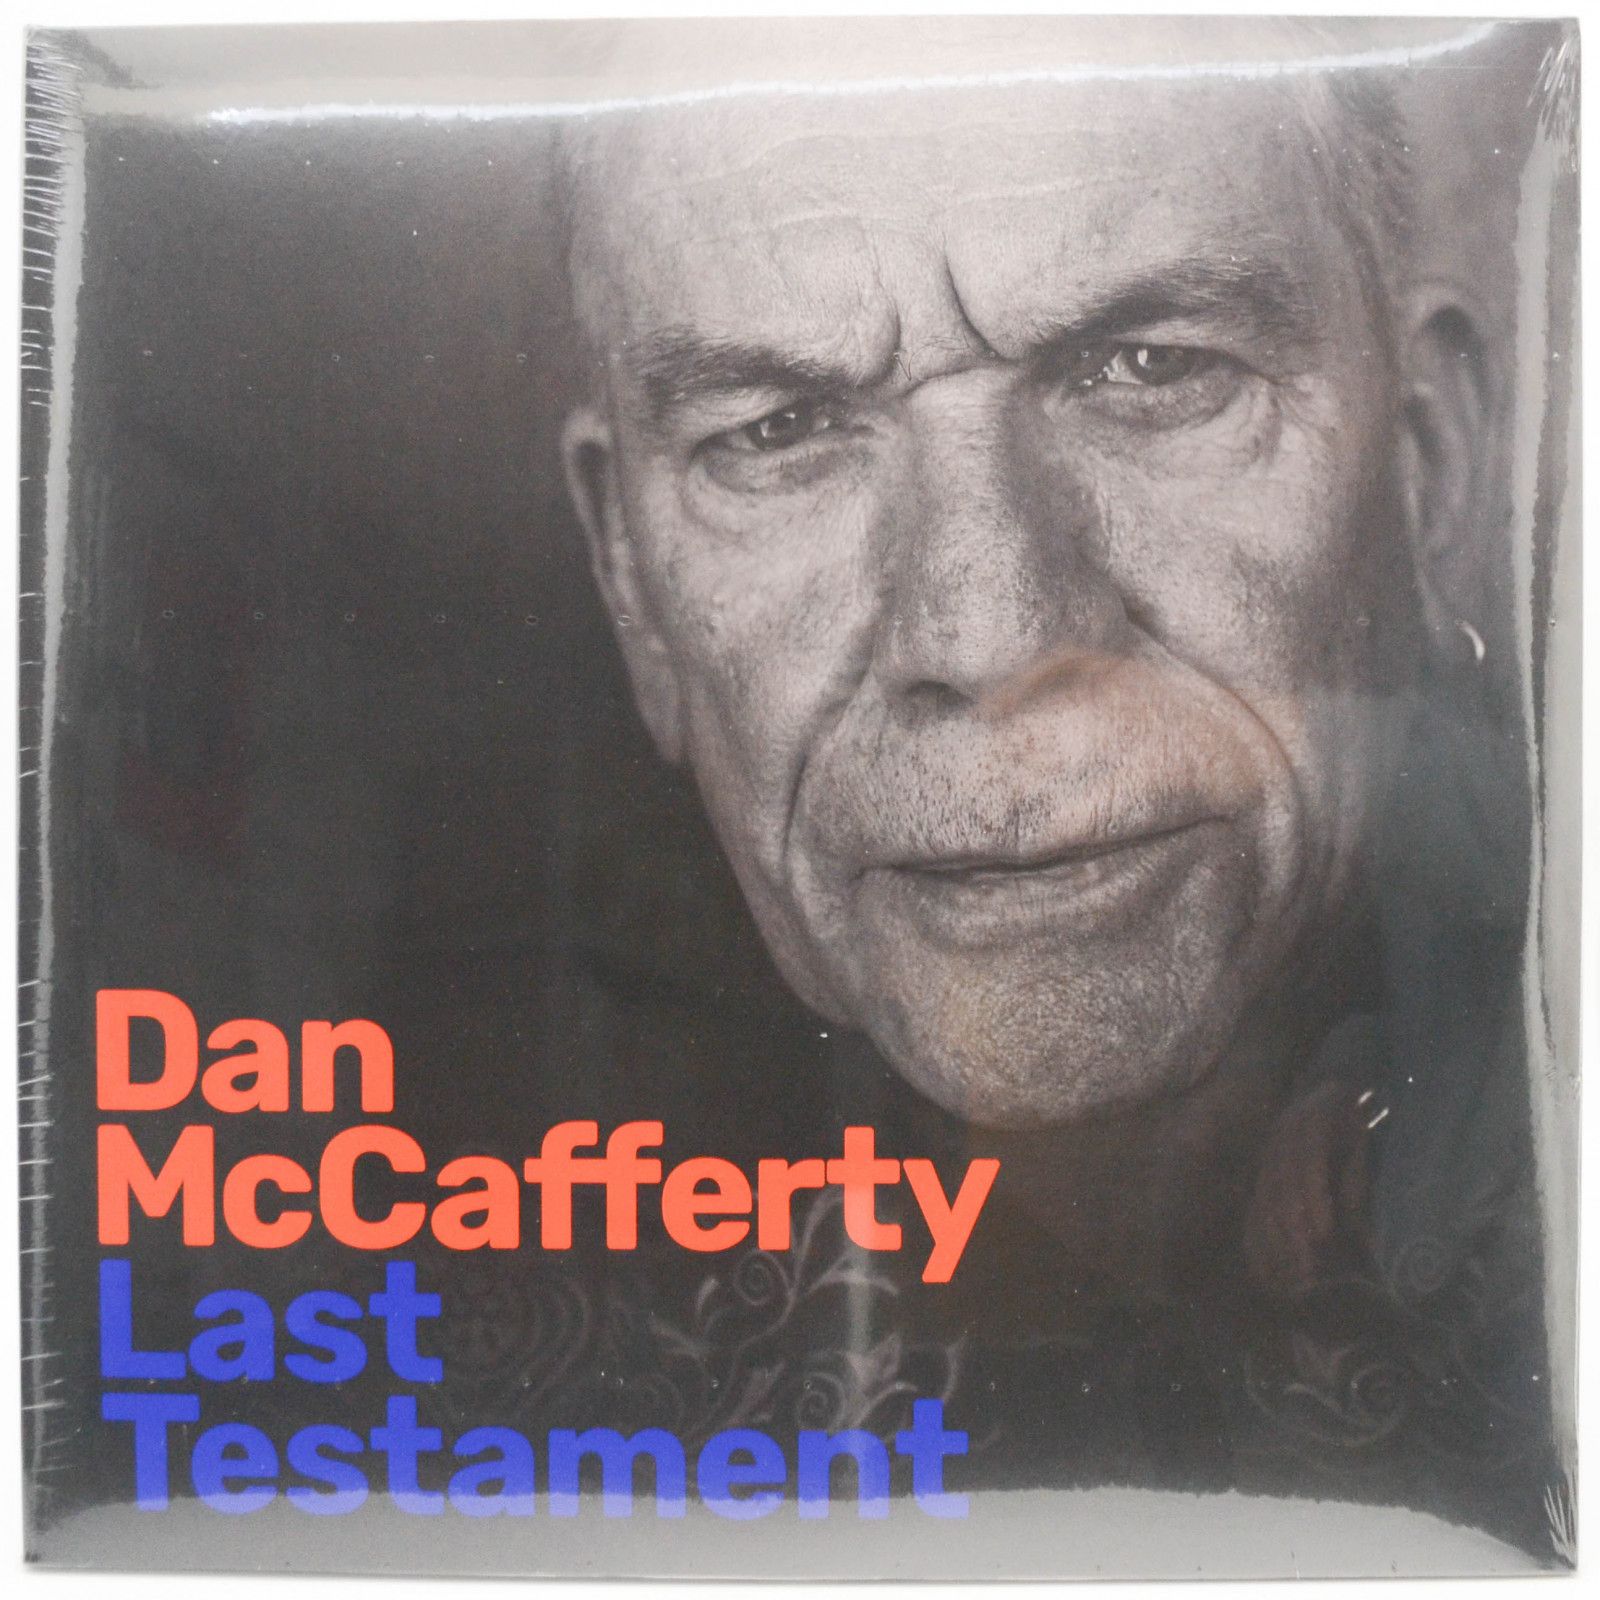 Dan McCafferty — Last Testament (2LP), 2019